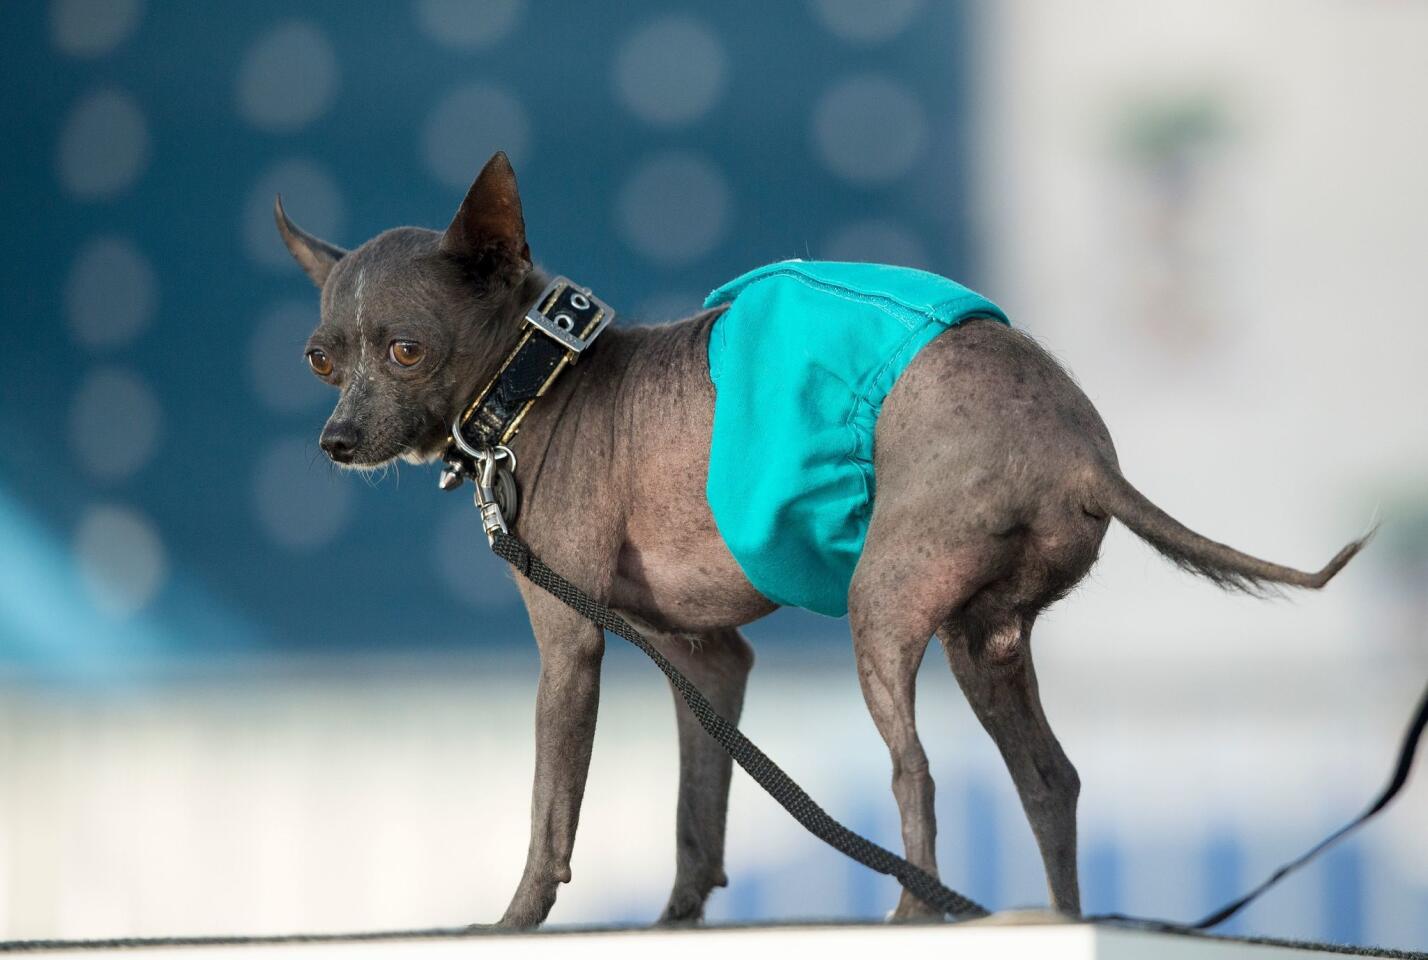 World's Ugliest Dog contest